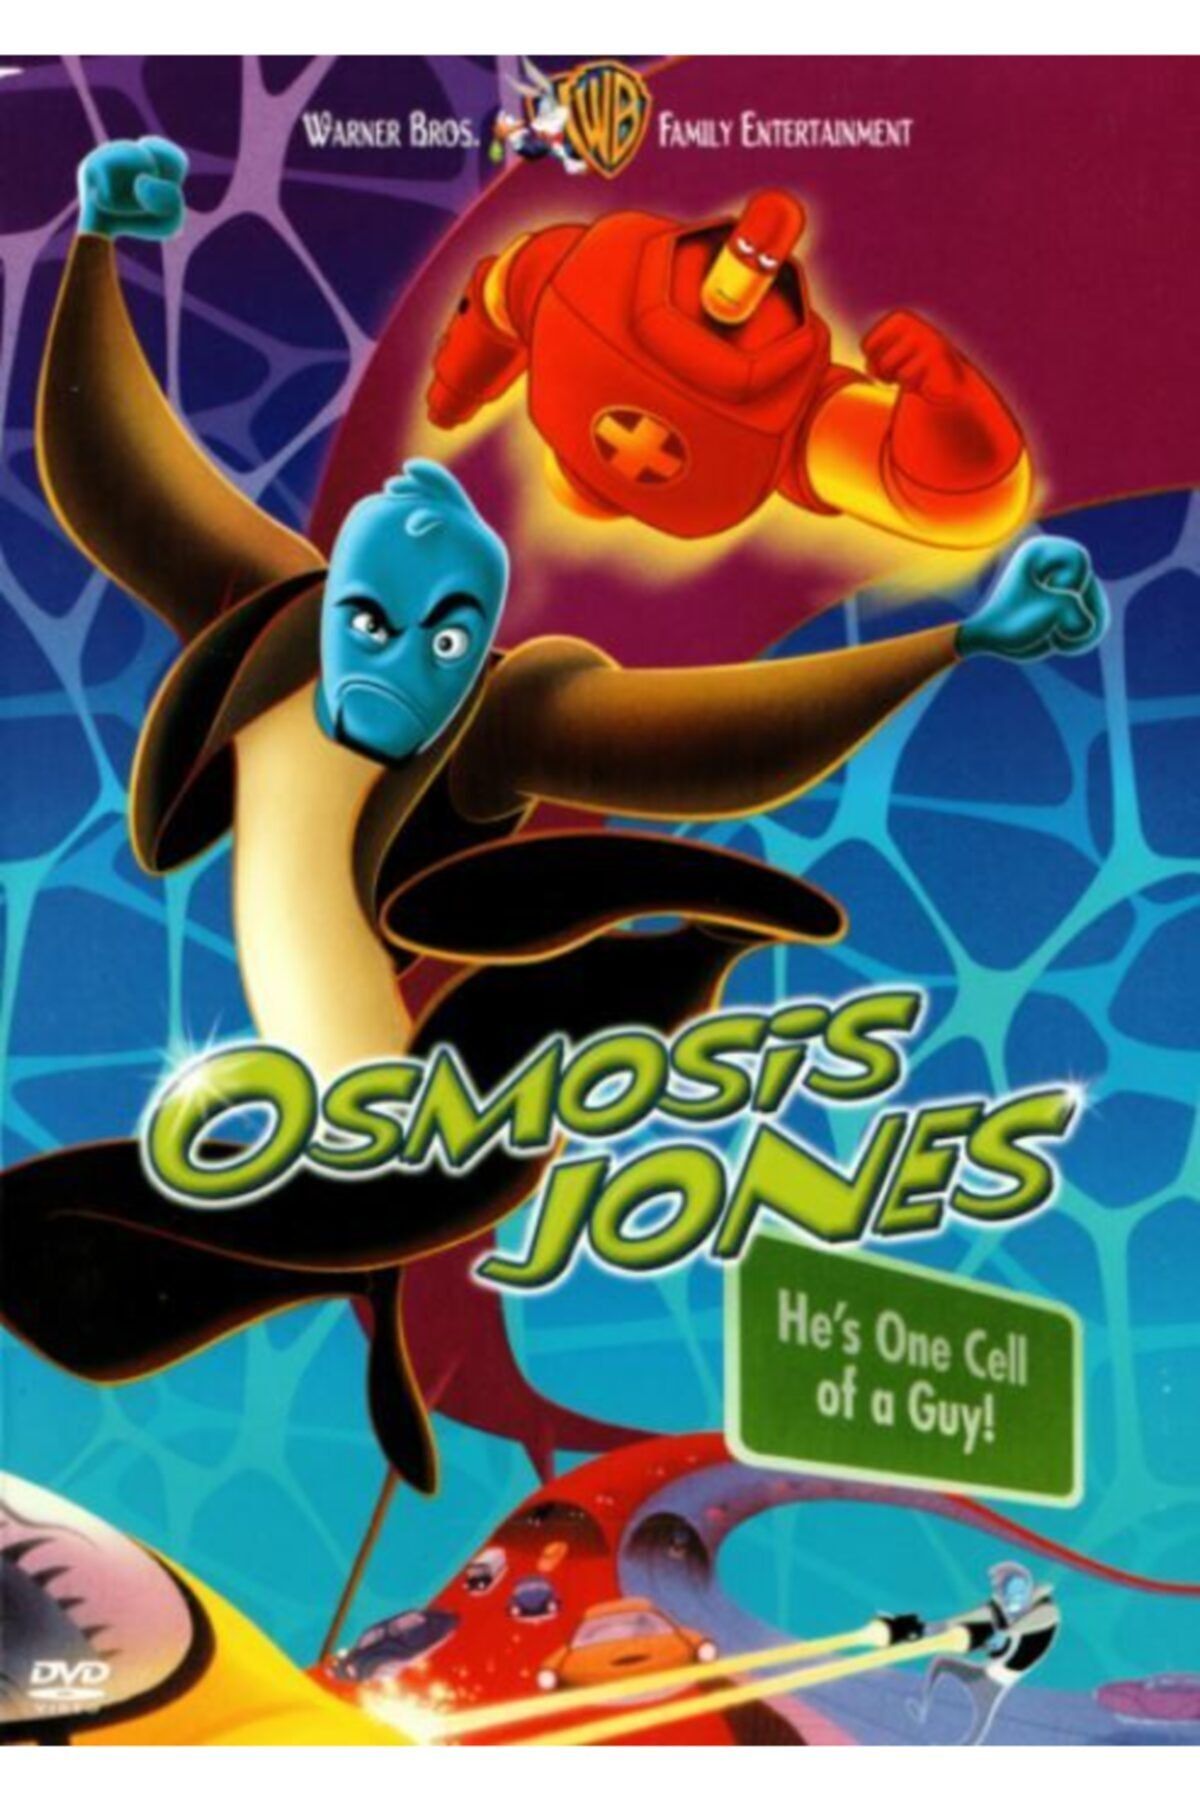 Warner Bros Osmosis Jones Dvd